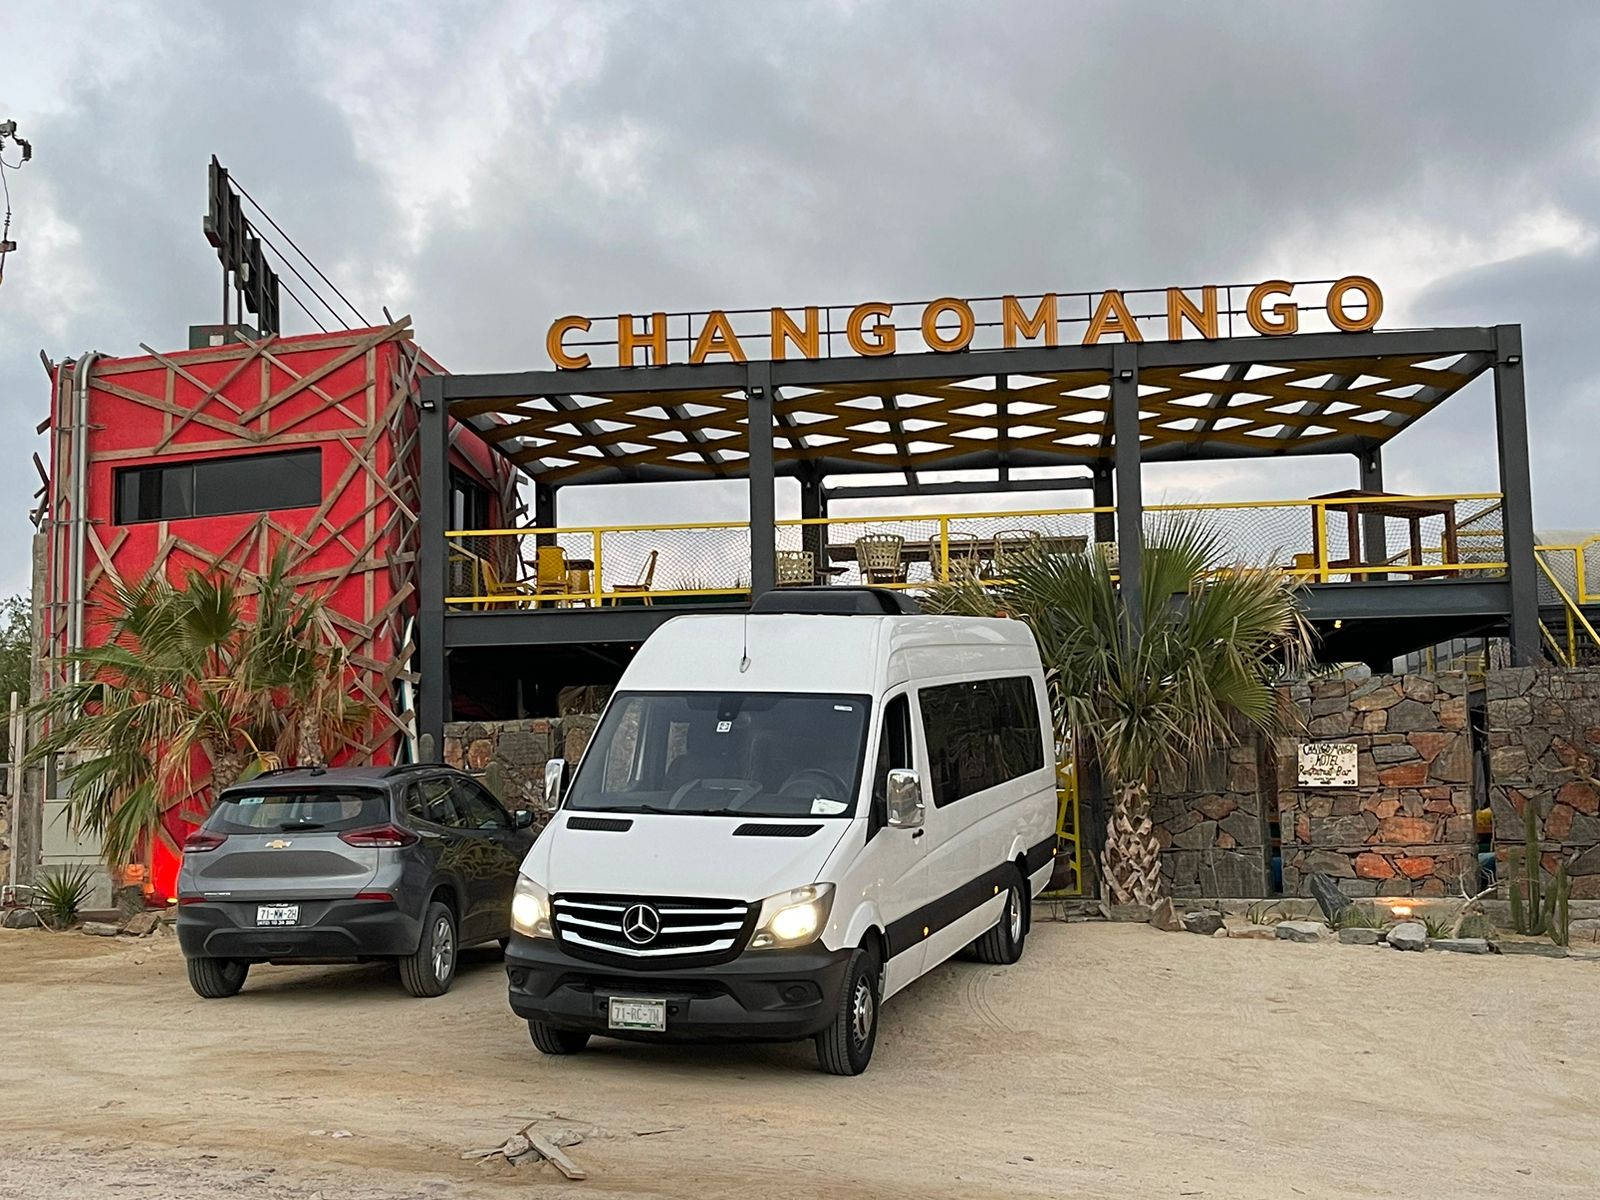 Hotel Changomango La Ventana Transfers